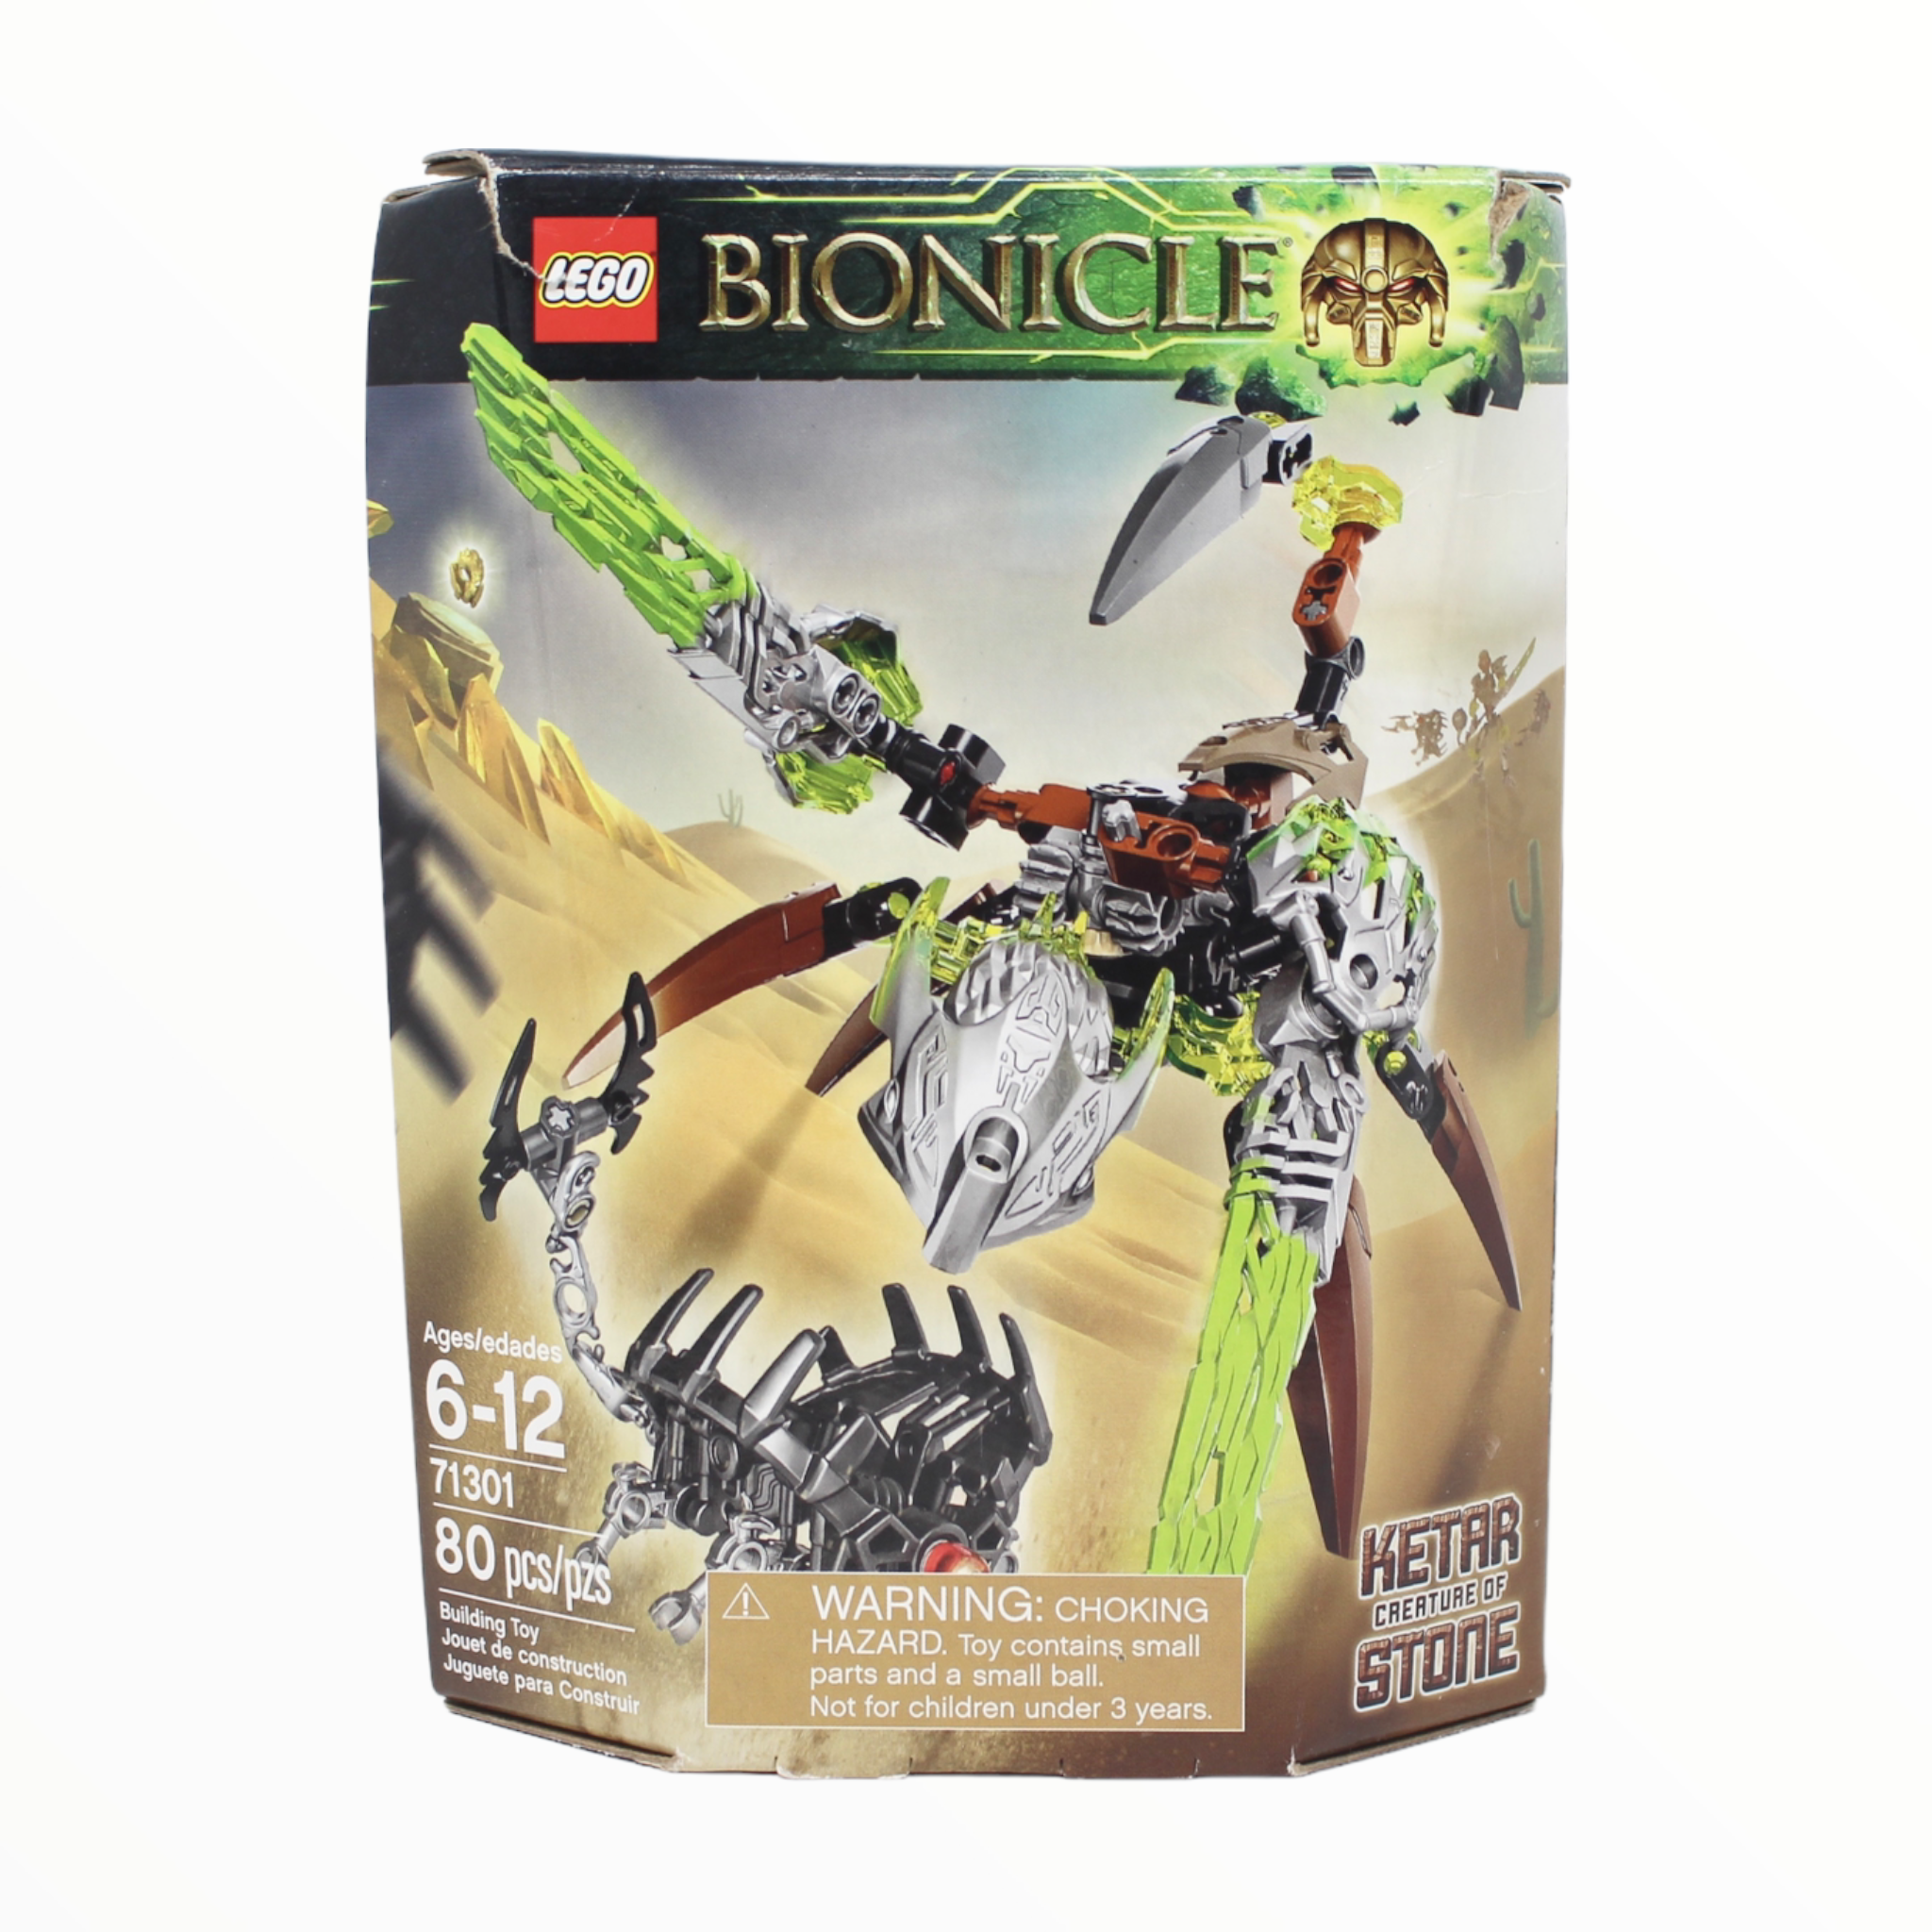 Certified Used Set 71301 Bionicle Ketar Creature of Stone